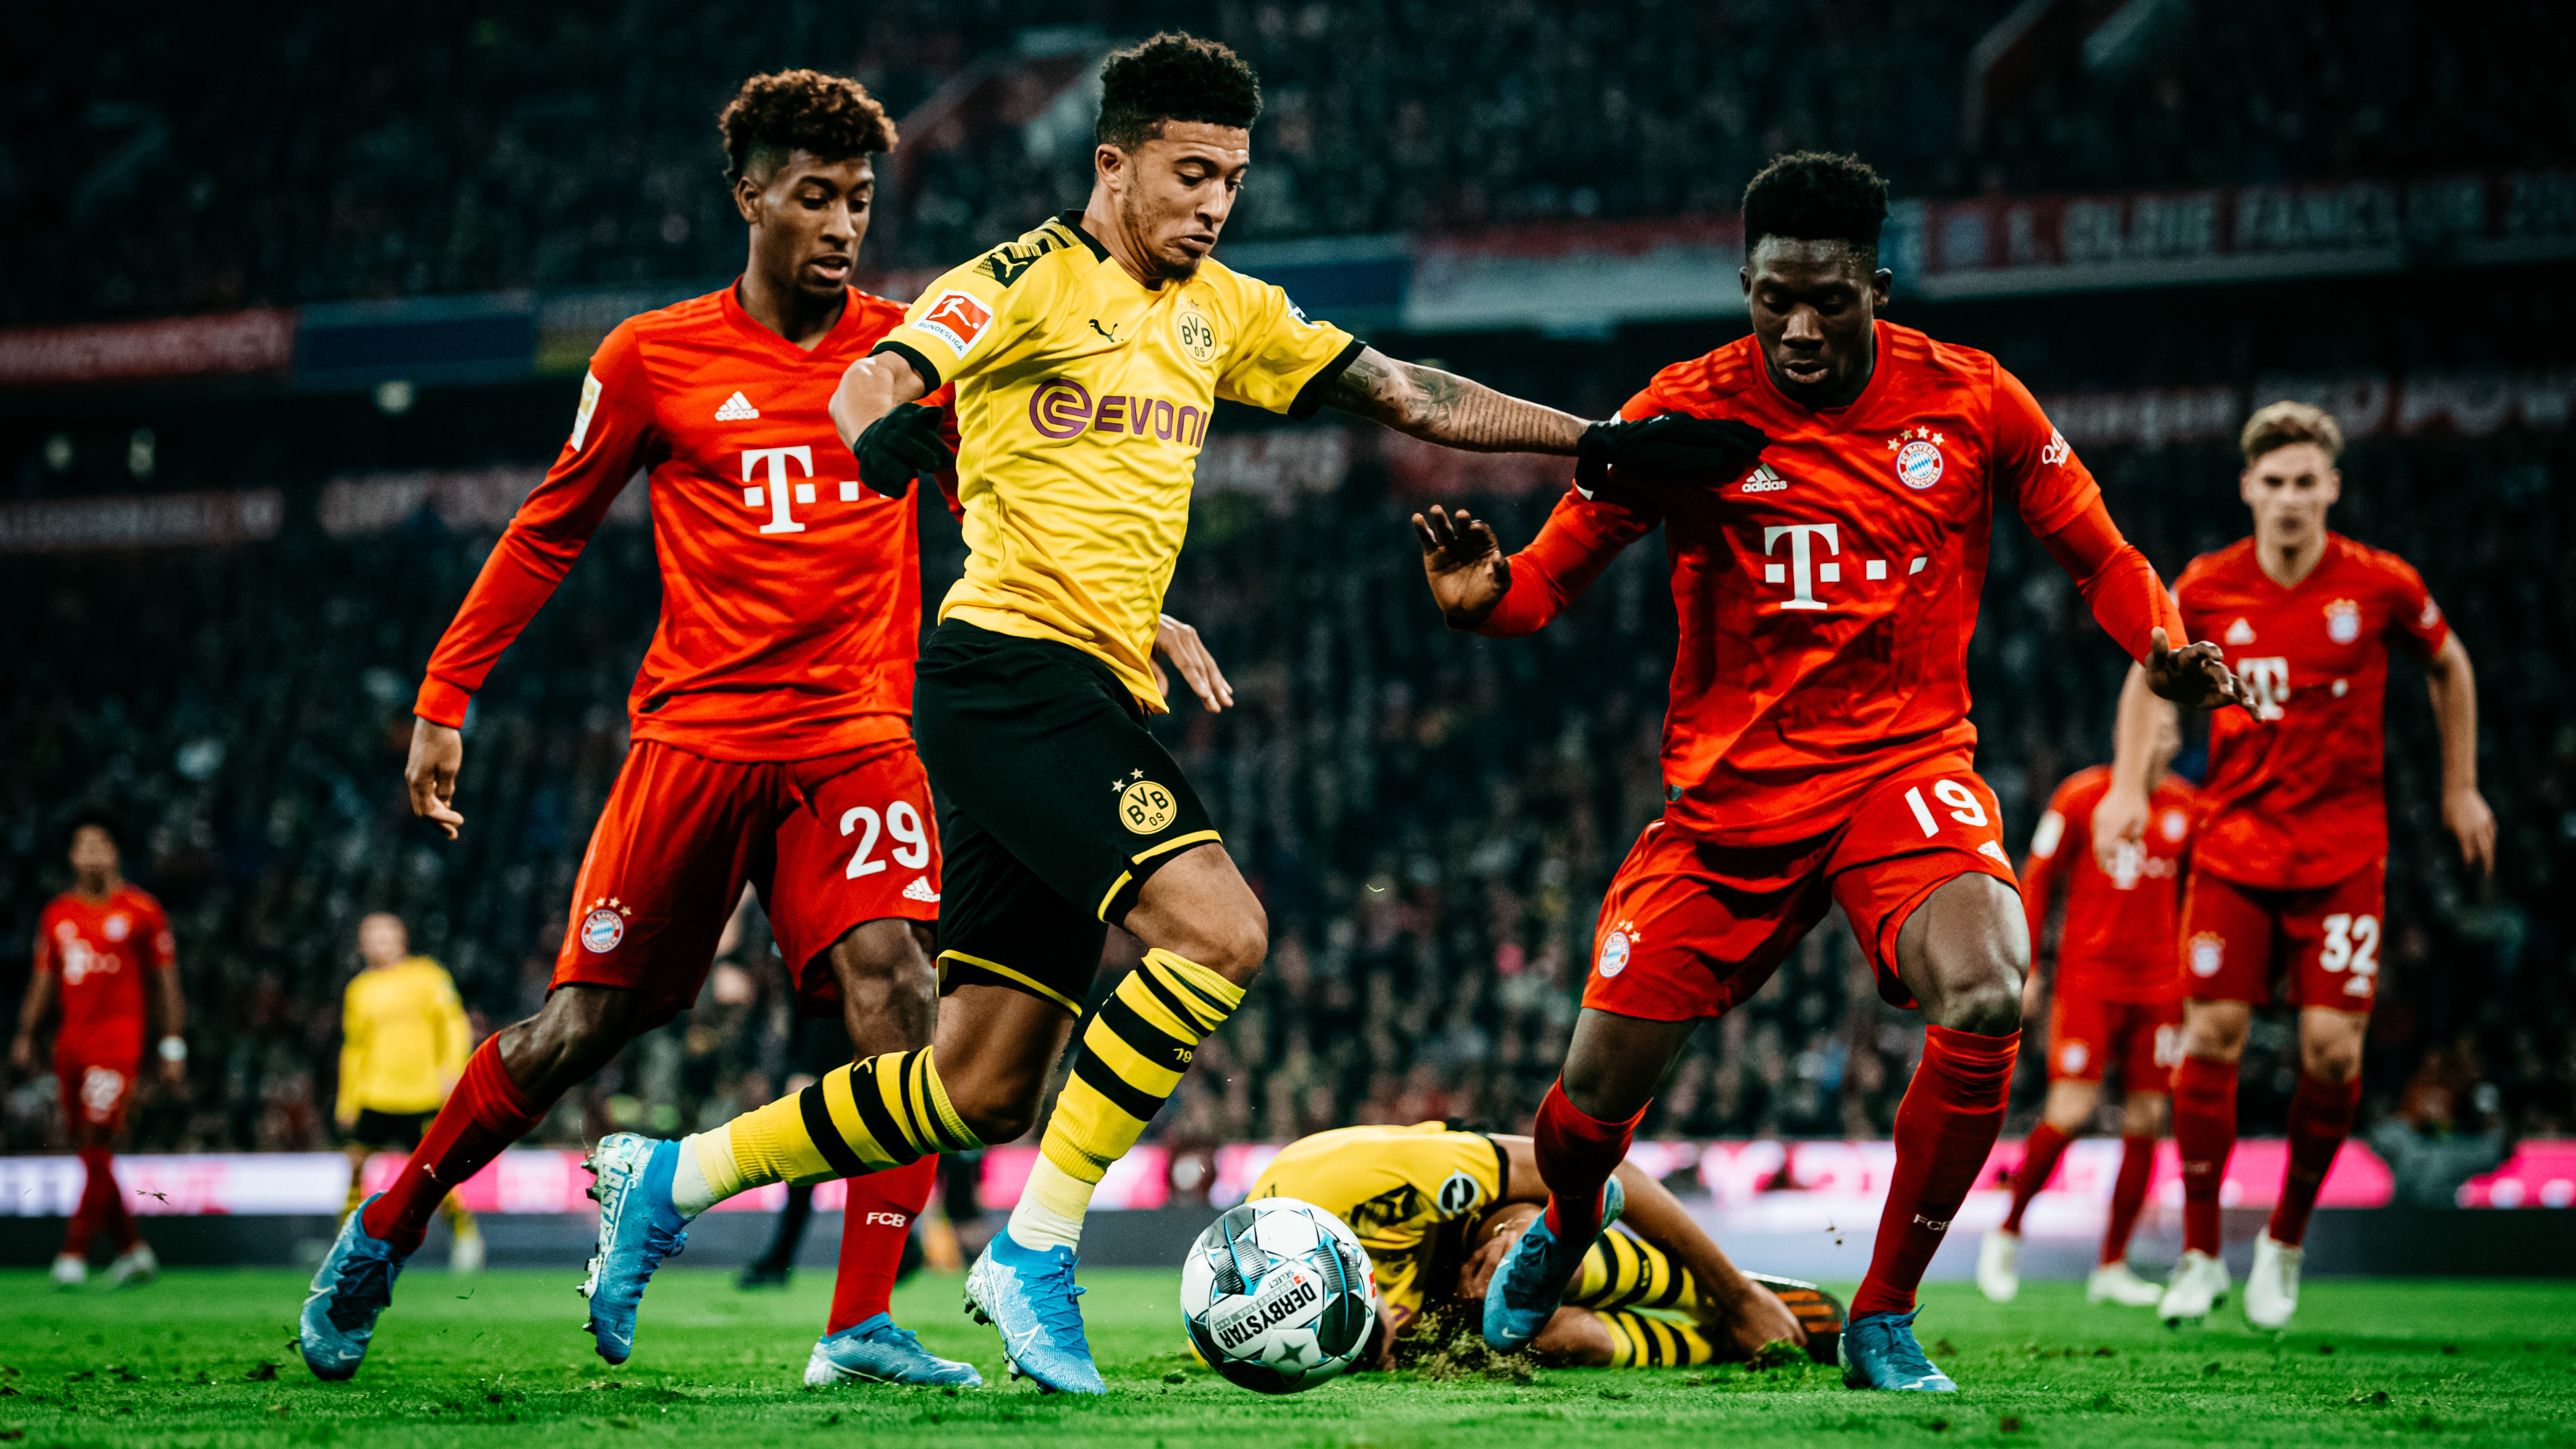 Dortmund vs Bayern live stream: watch the Bundesliga online from anywhere right now